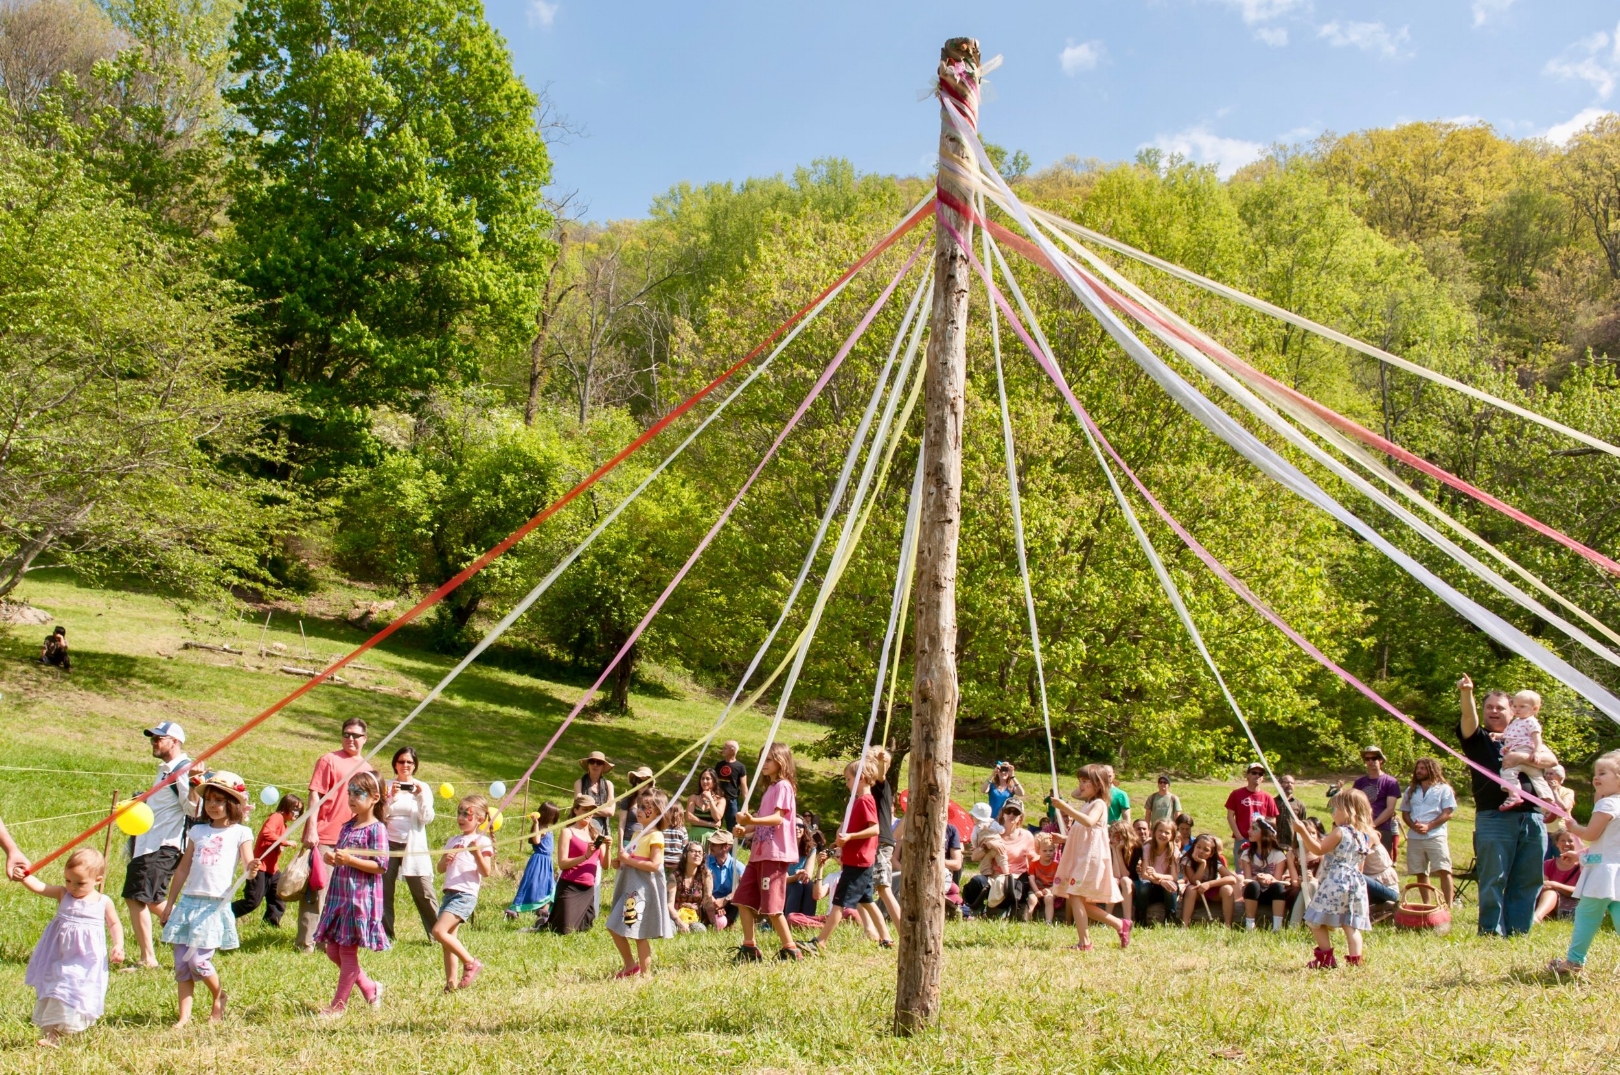 Festivals enrich our sense of community and celebrate seasonal rhythms